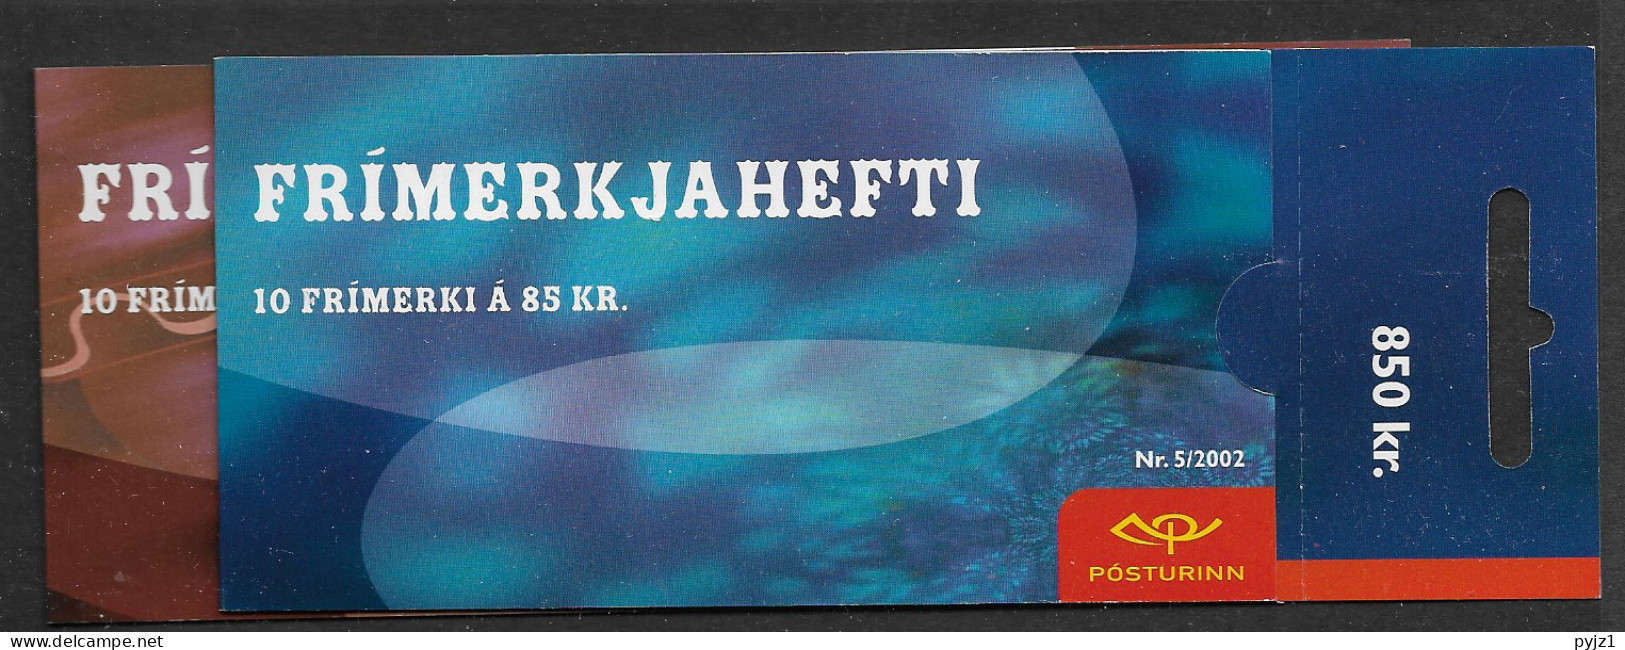 2002 MNH Iceland Booklet (2), Postfris** - 2002